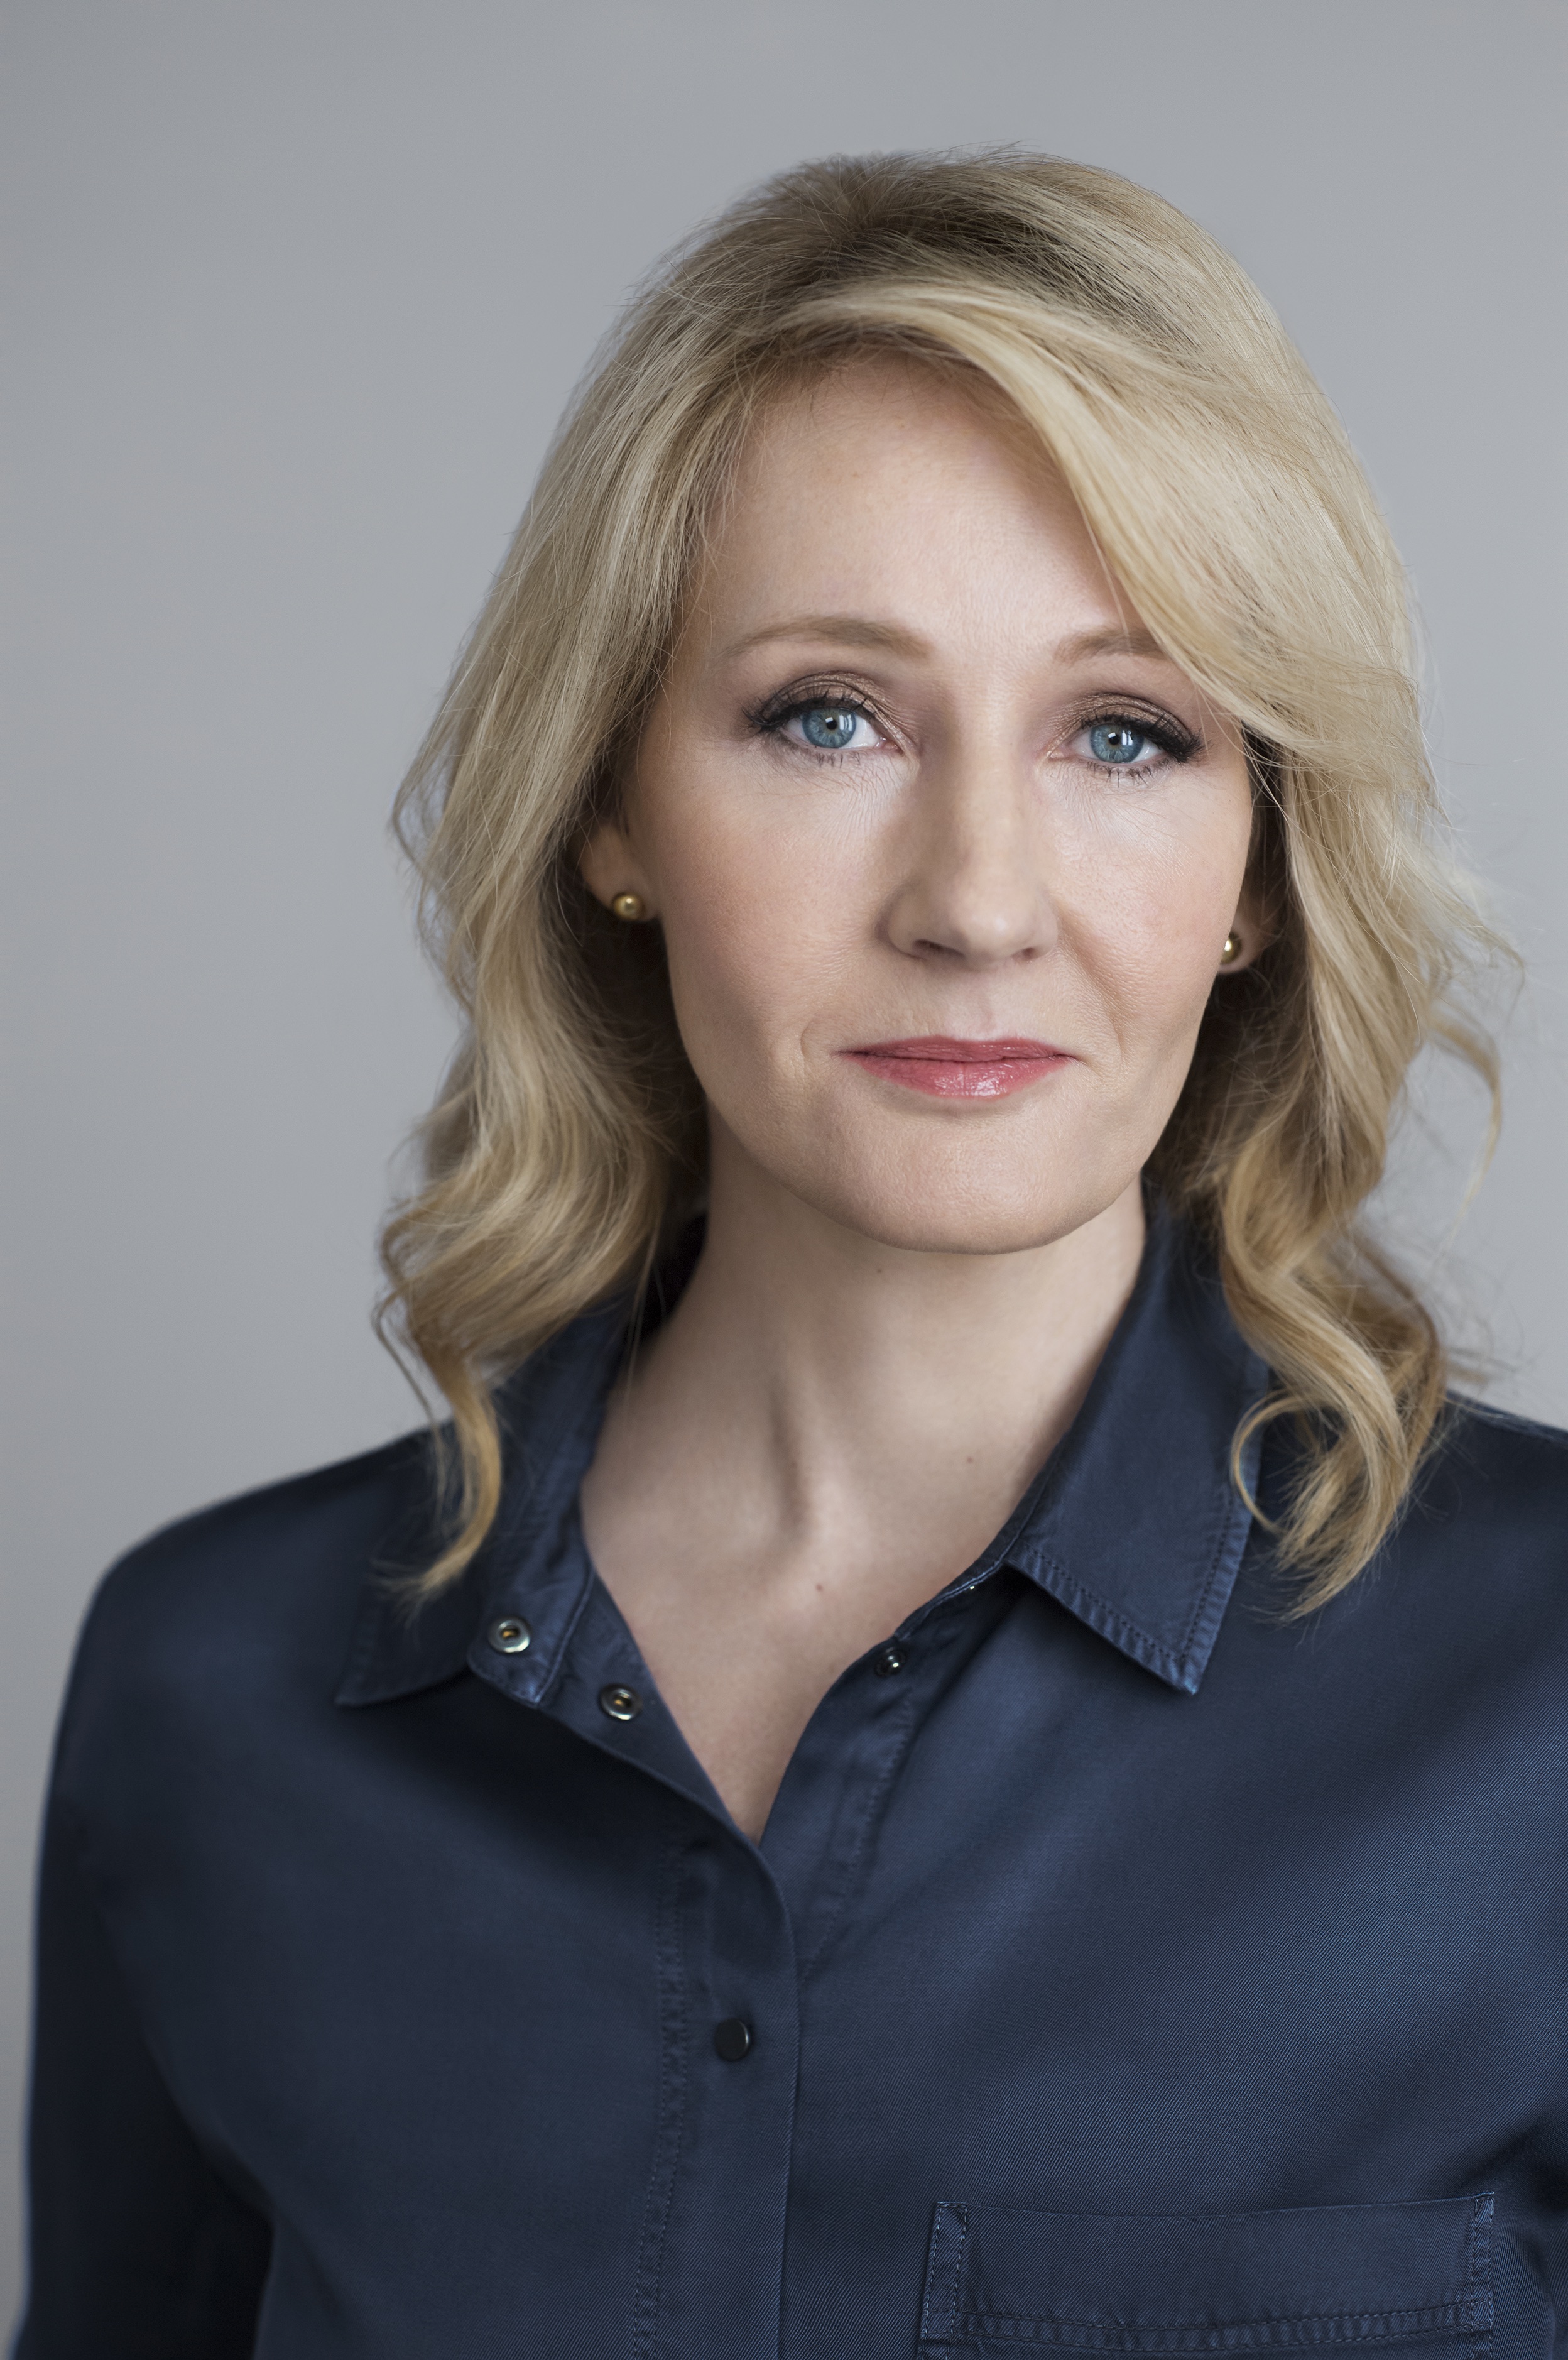 Jk Rowling Photos Wallpapers